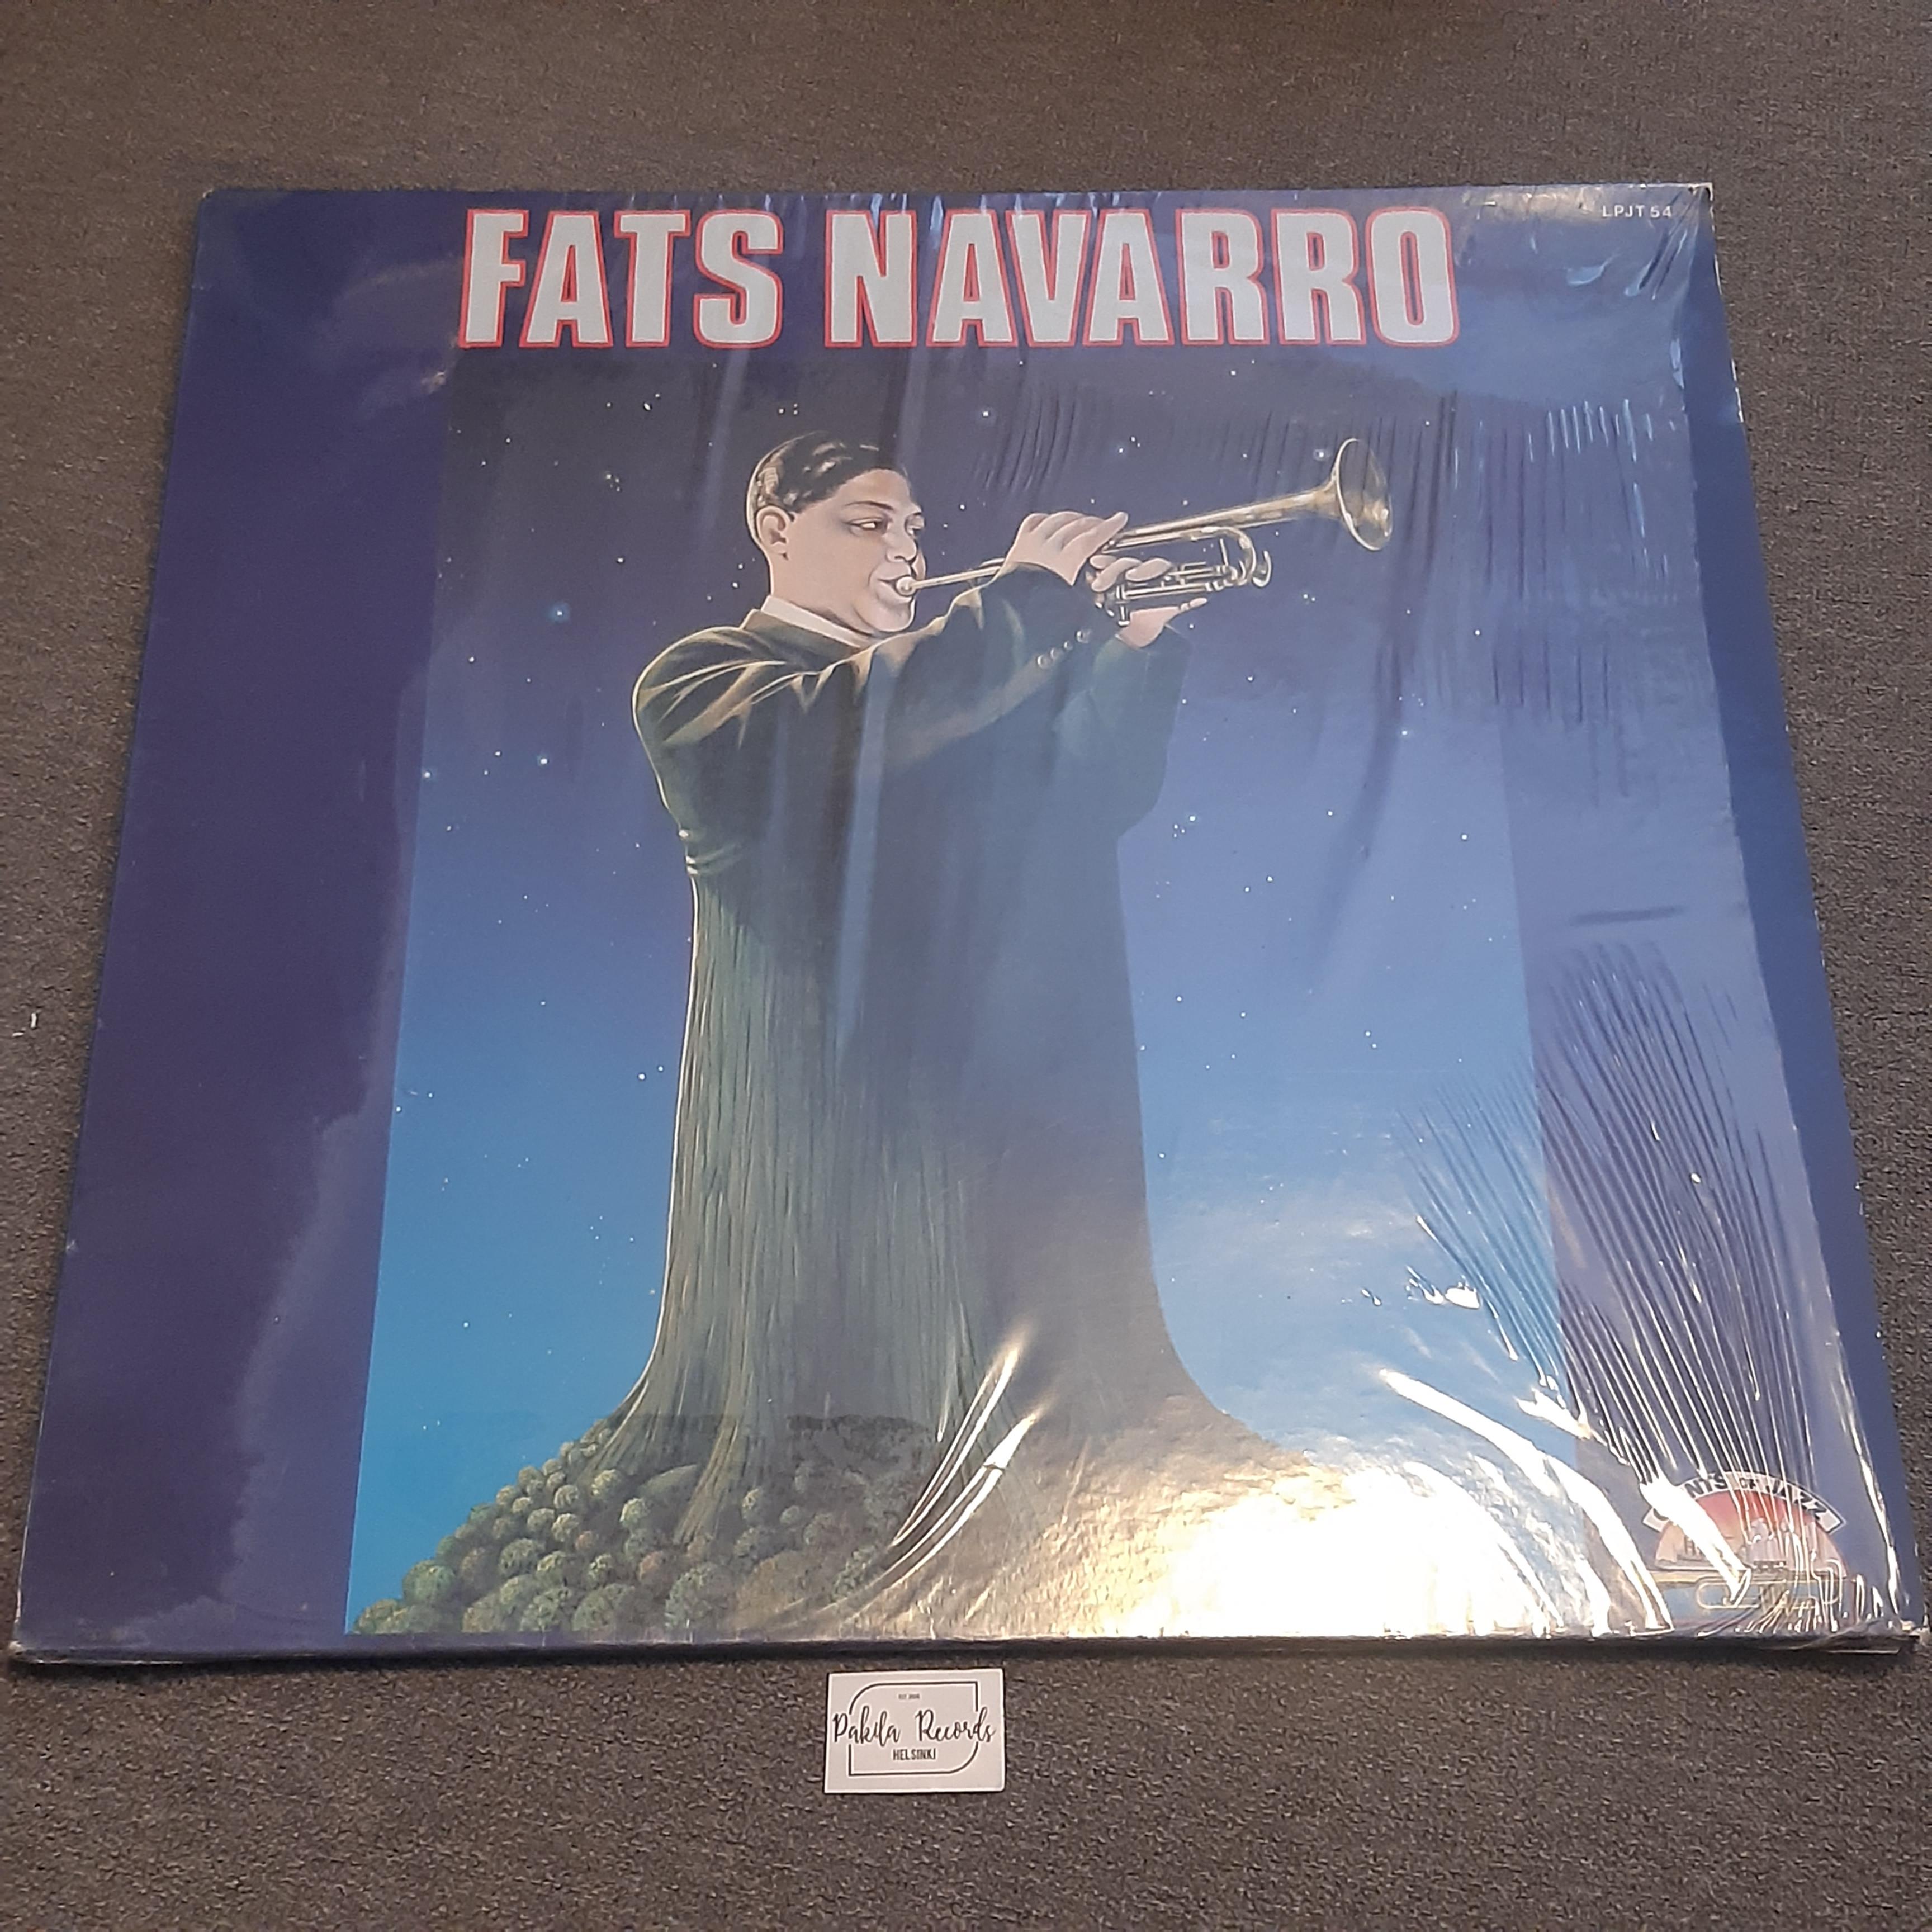 Fats Navarro - Fats Navarro - LP (käytetty)